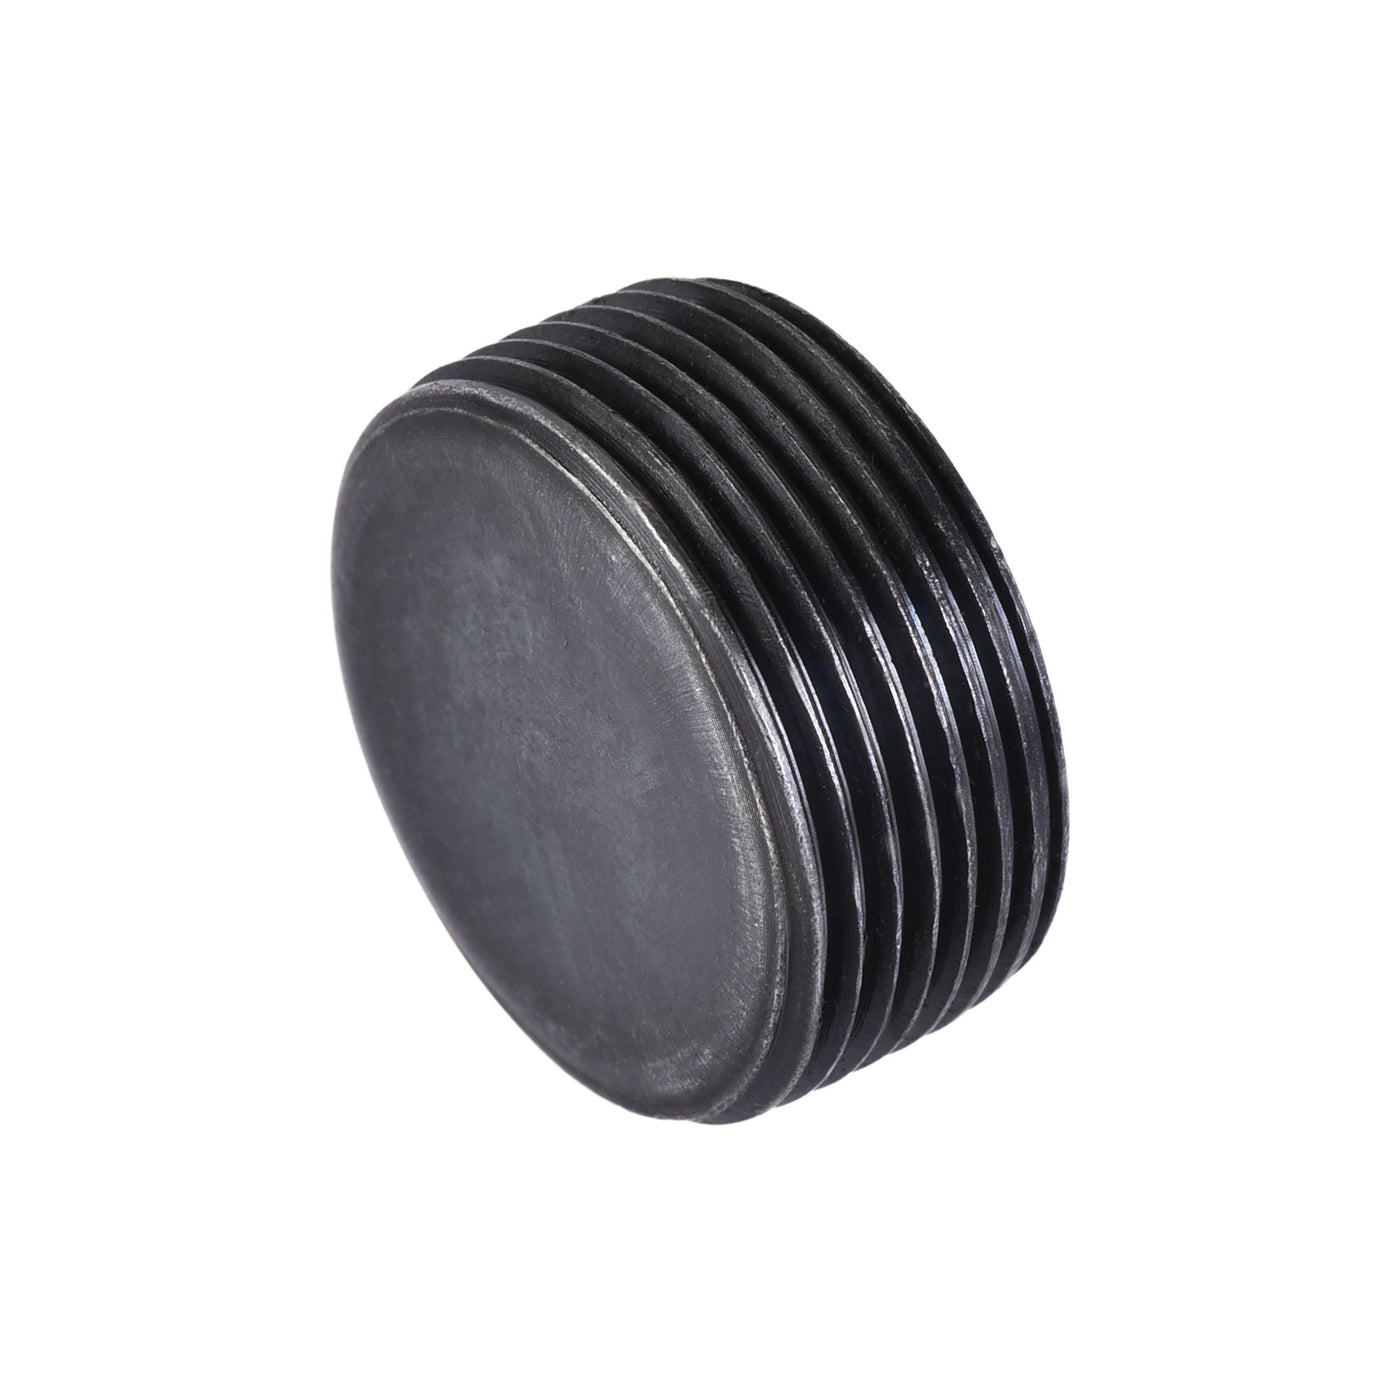 Uxcell Uxcell Carbon Steel Internal Hex Thread Socket Pipe Plug M27x1.5 Male Thread Black